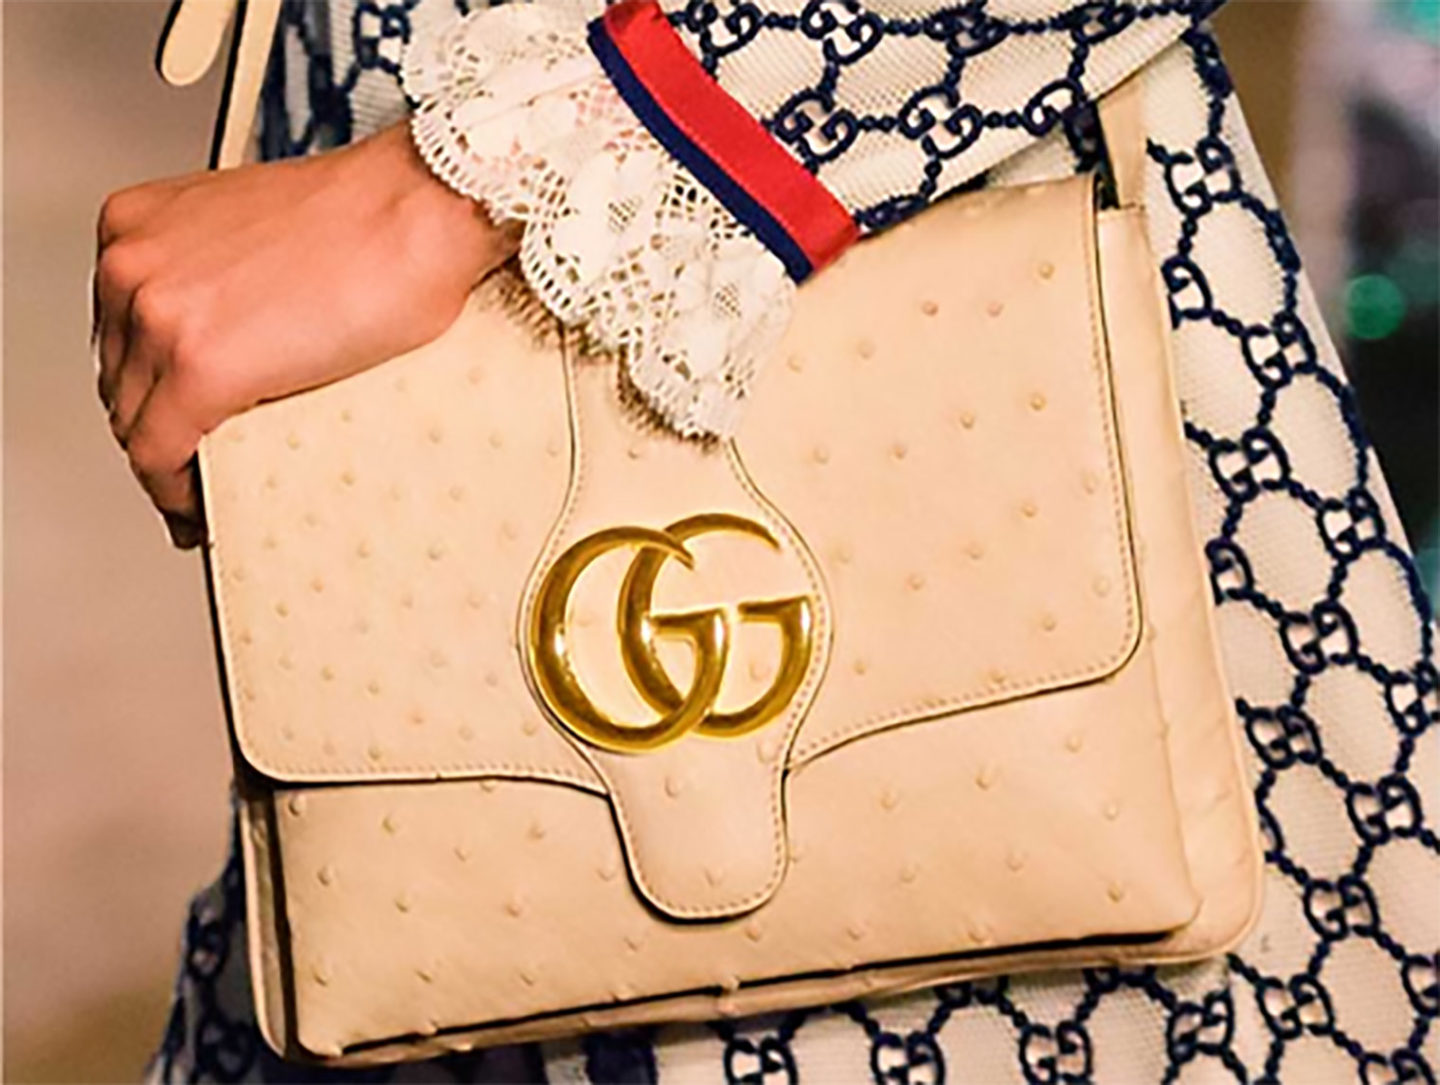 Newest Gucci bags this fall Gucci Arli bag